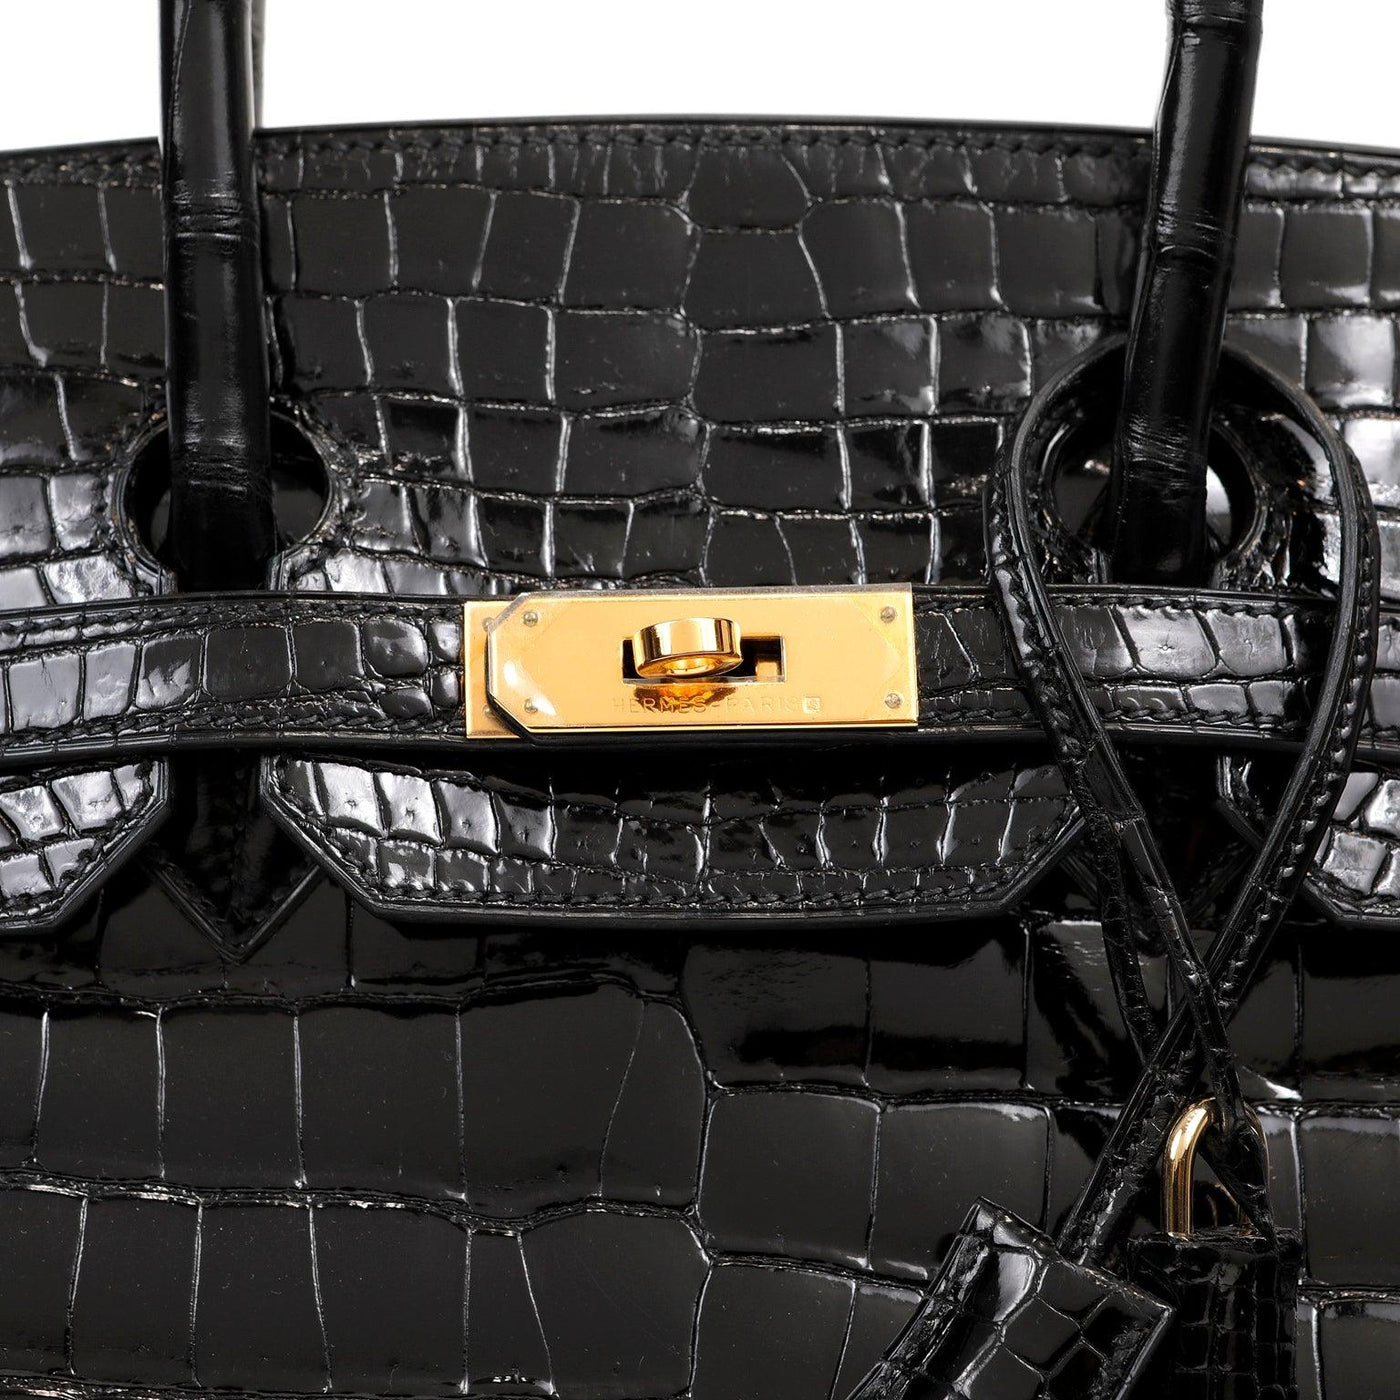 Hermes Birkin Bag Crocodile Leather Gold Hardware In Black